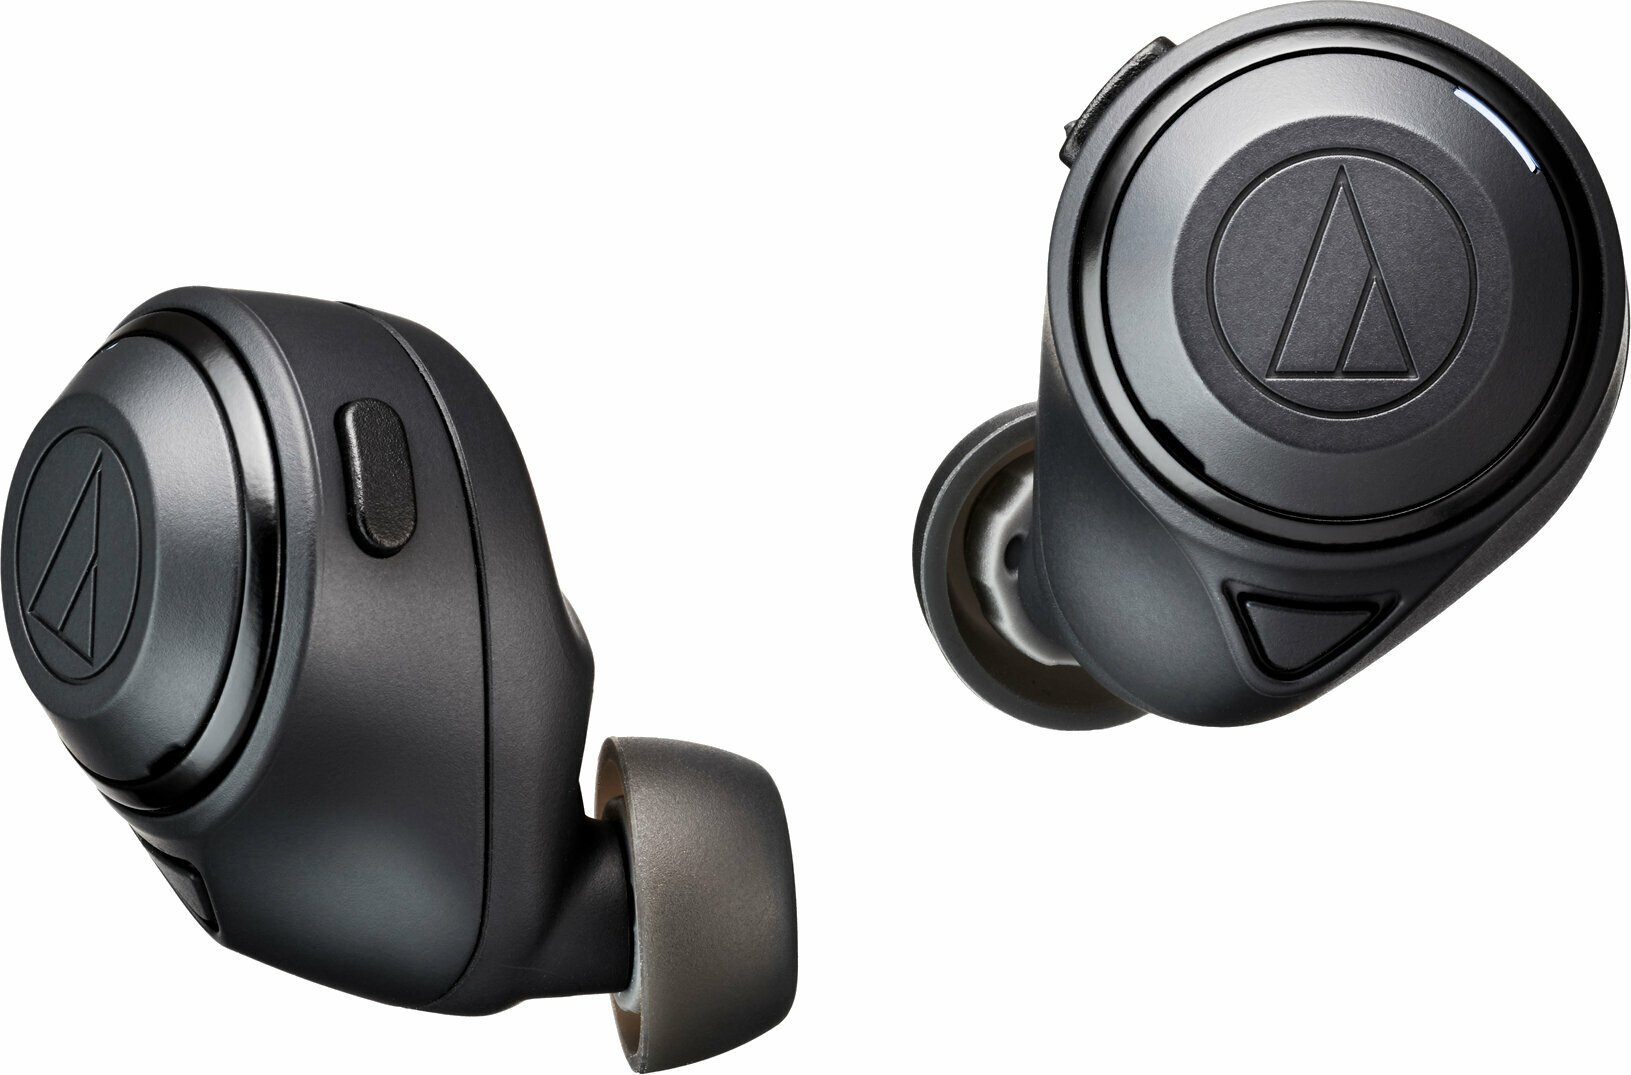 True trådlös in-ear Audio-Technica ATH-CKS50TW Black